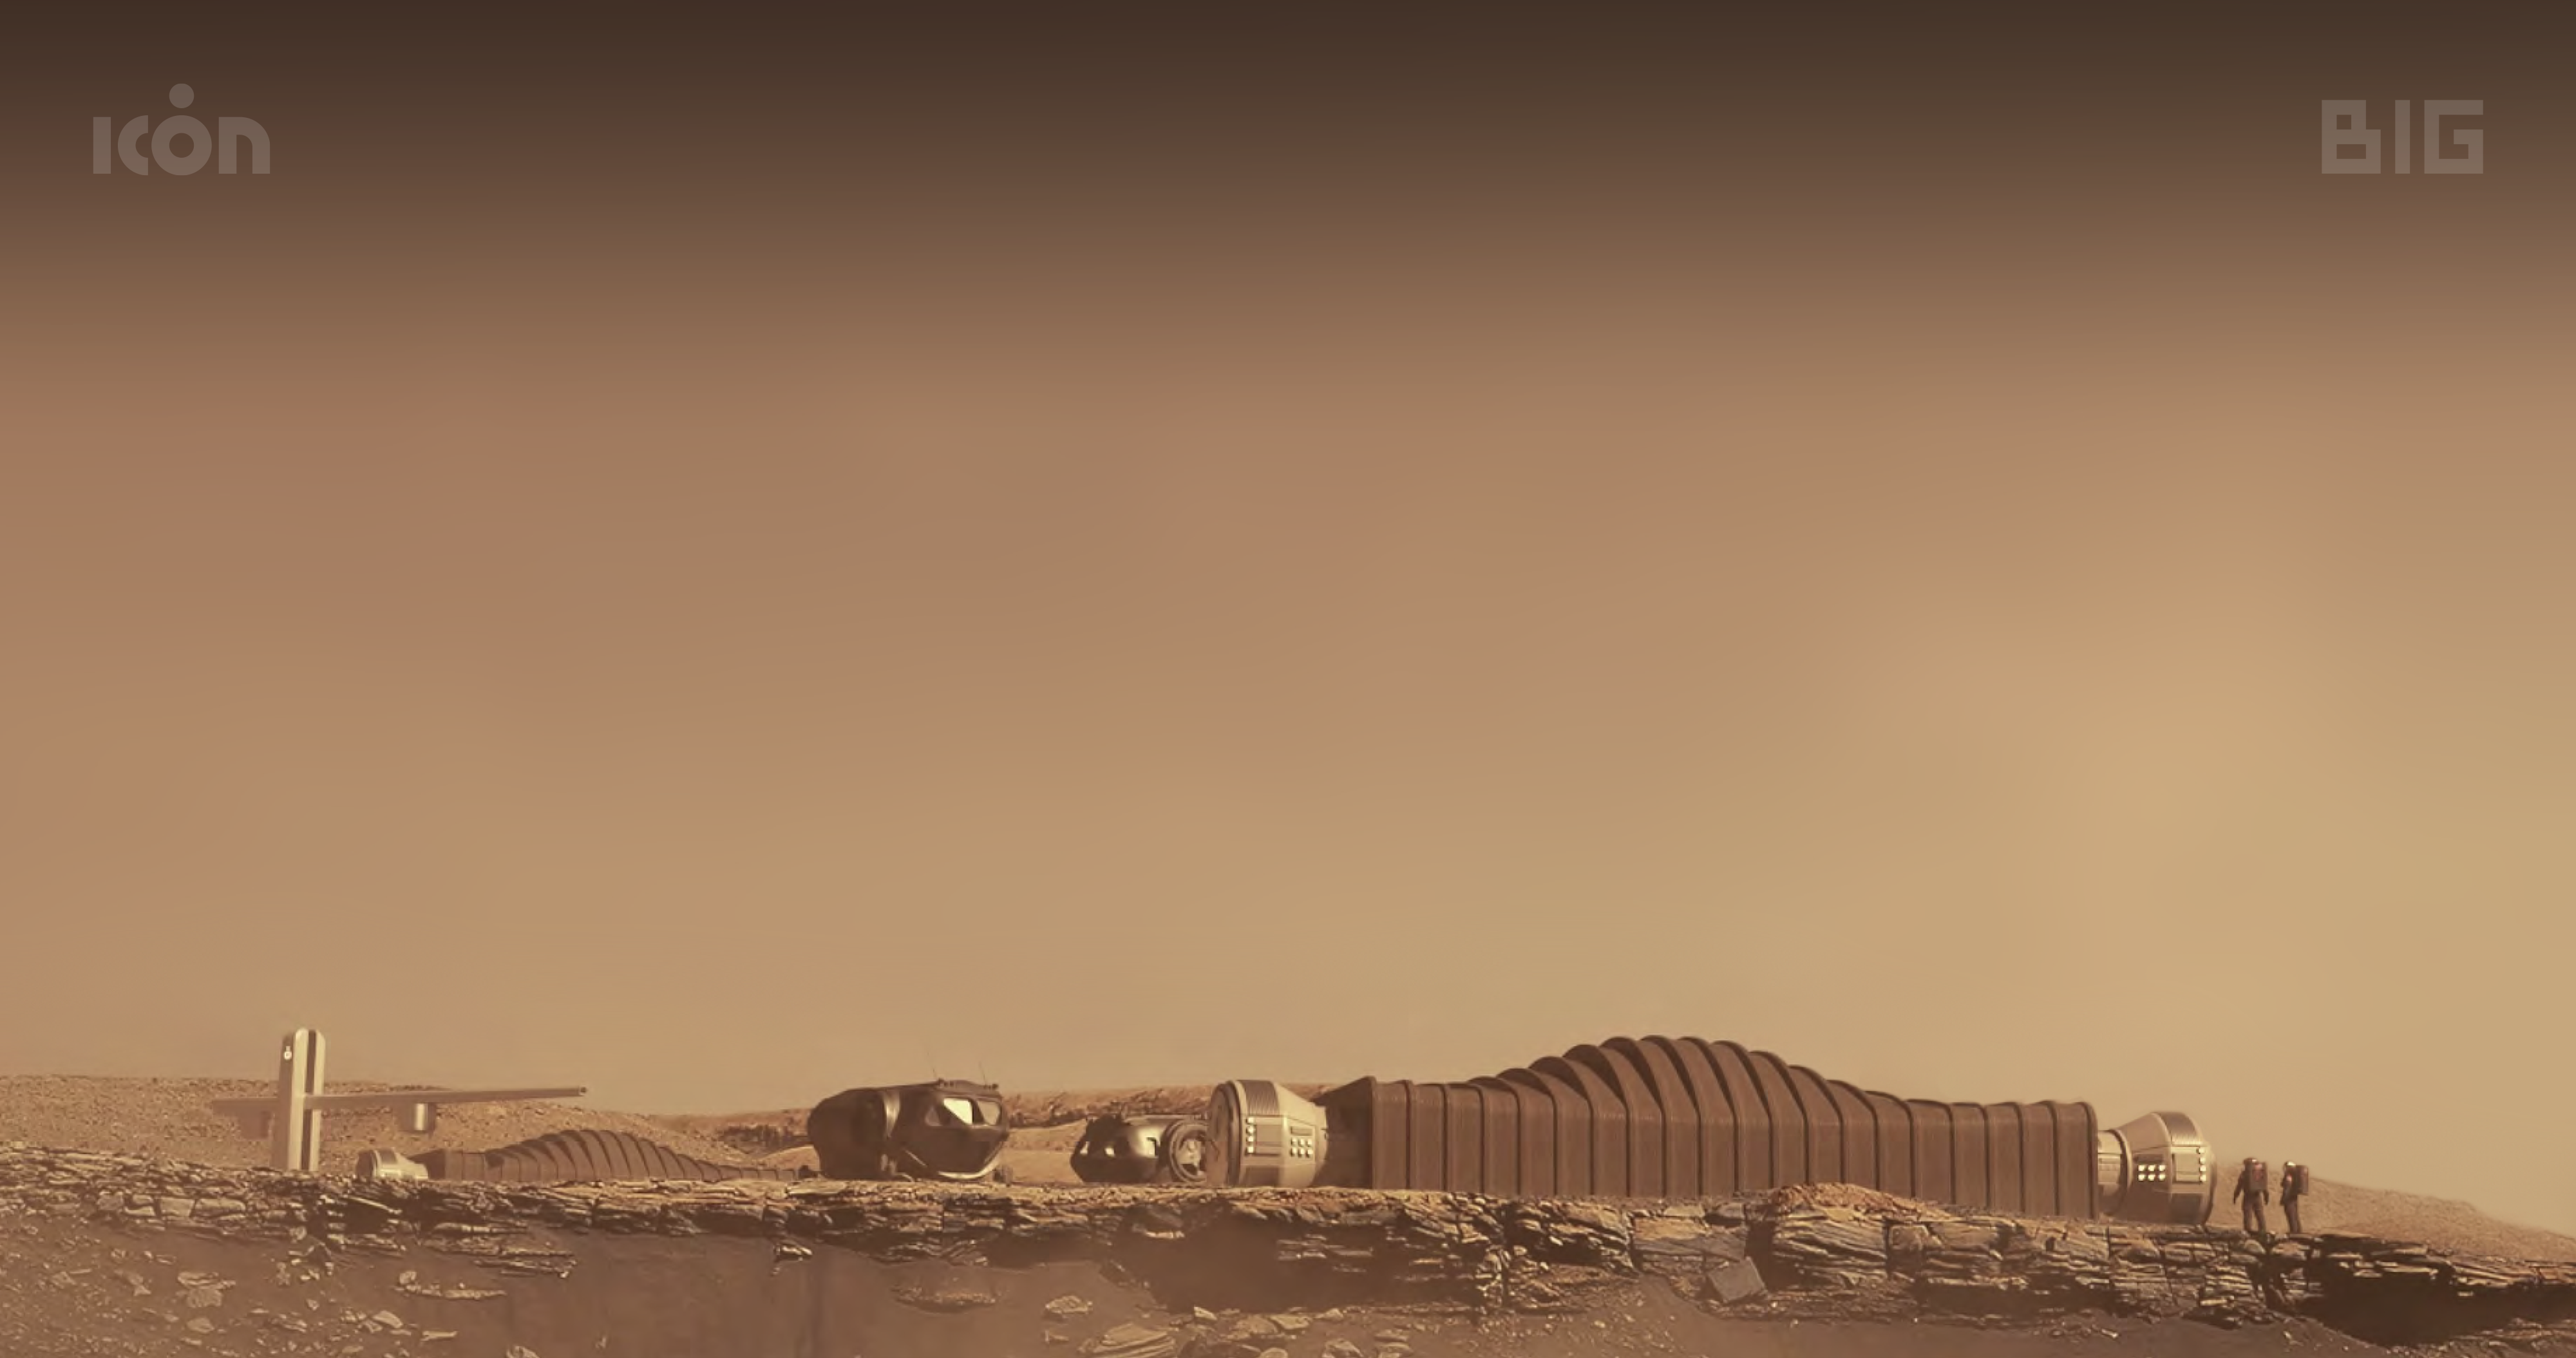 ICON NASA CHAPEA Mars-Dune-Alpha concept rendering a